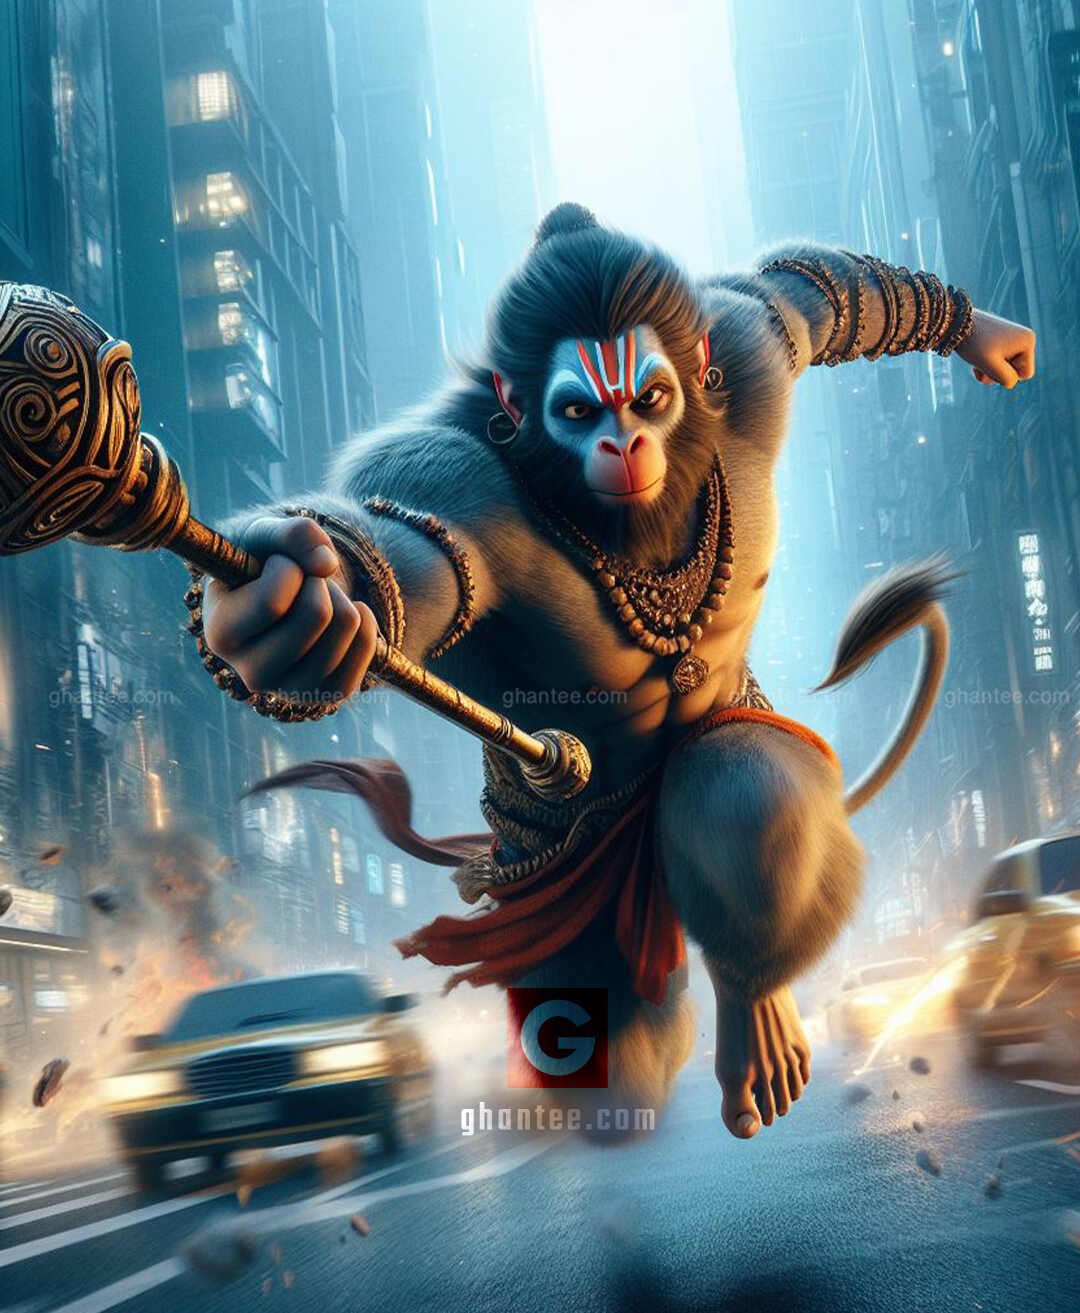 lord hanuman latest action image